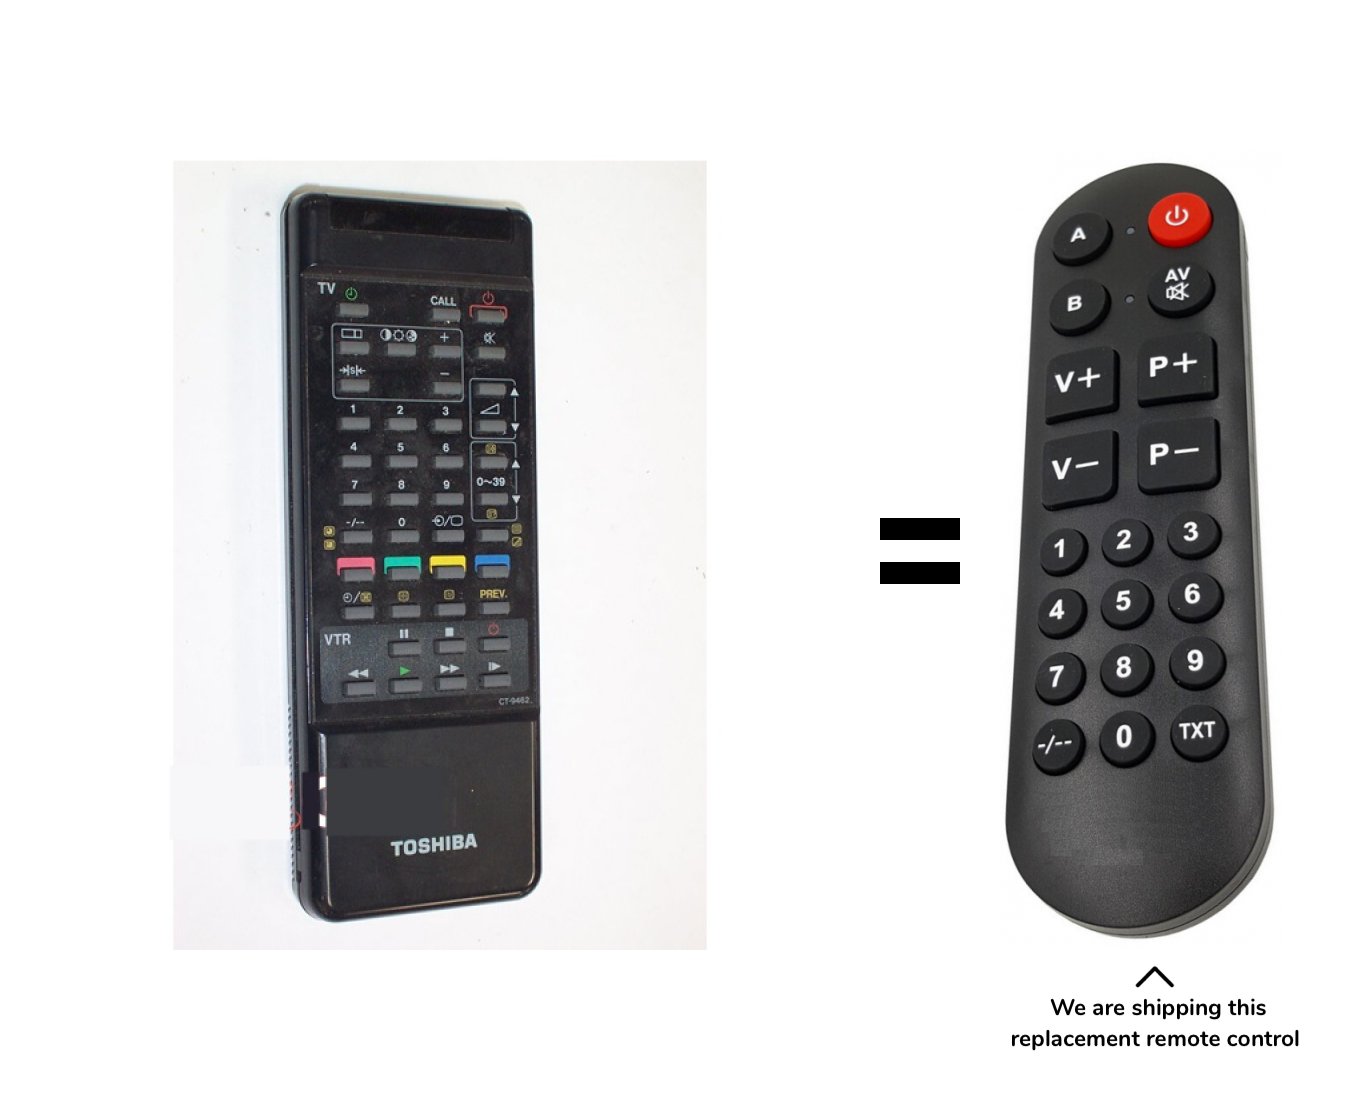 Toshiba CT-9481 remote control for seniors